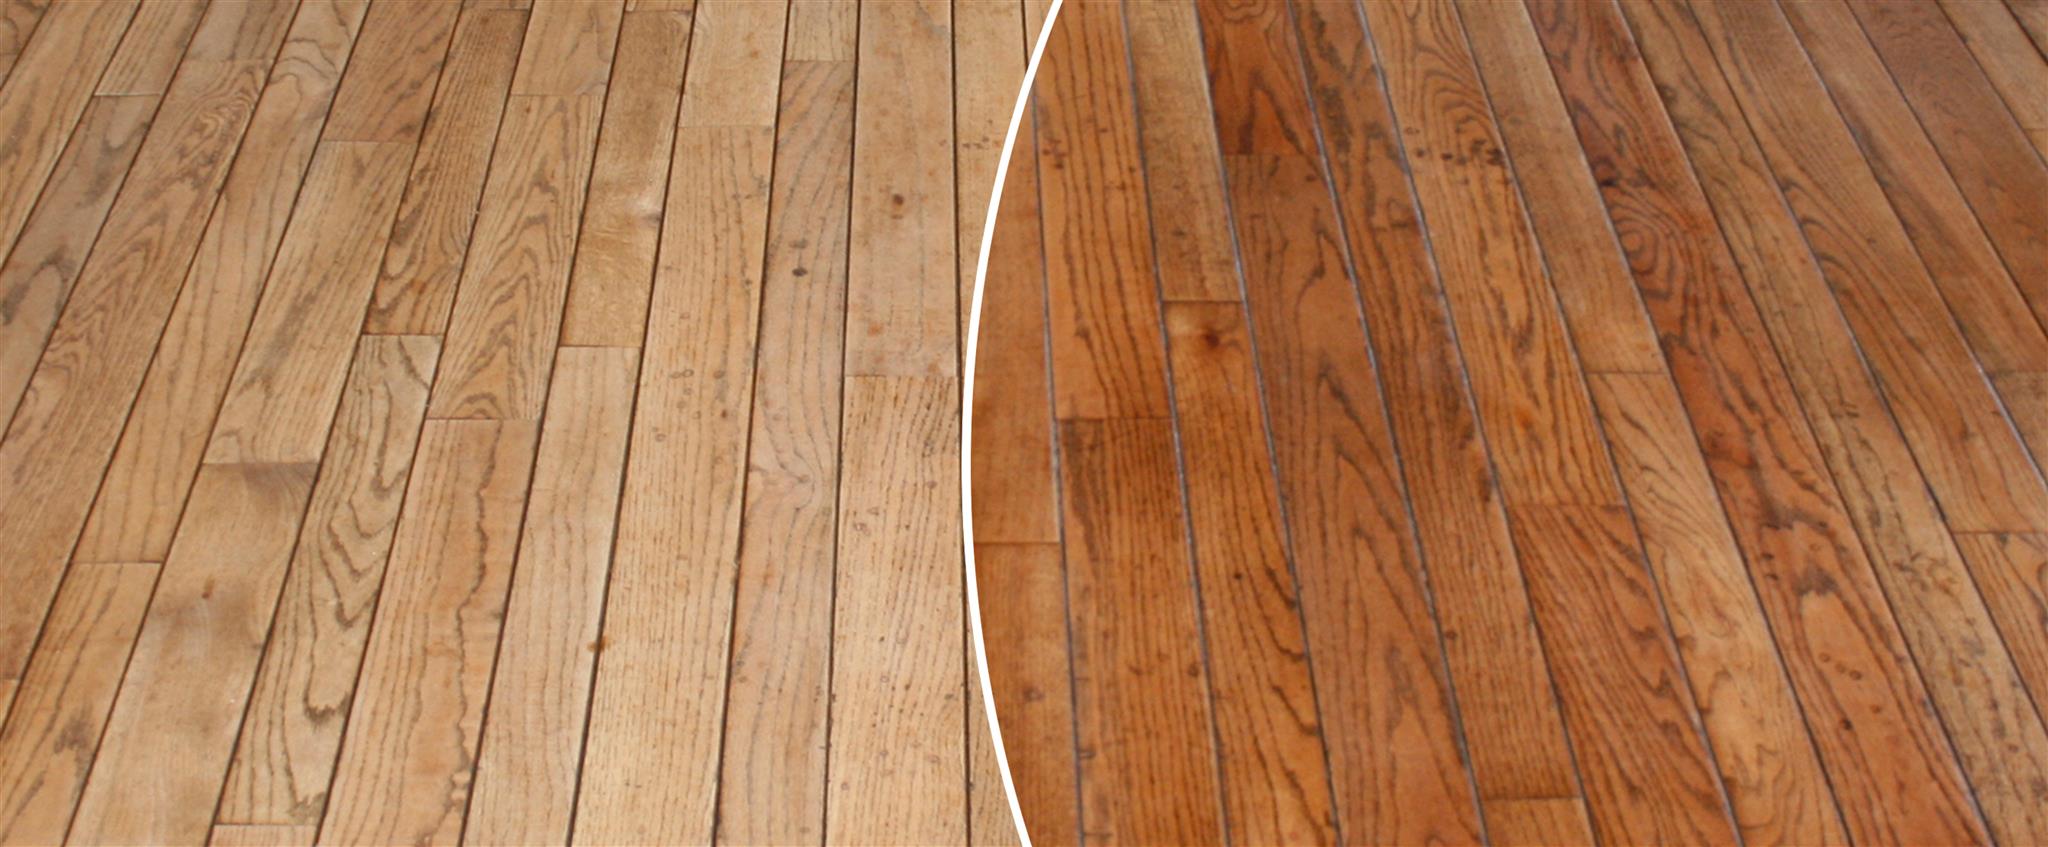 Wood Floor Refinishing Services N Hance, Asheville Hardwood Floor Refinishing